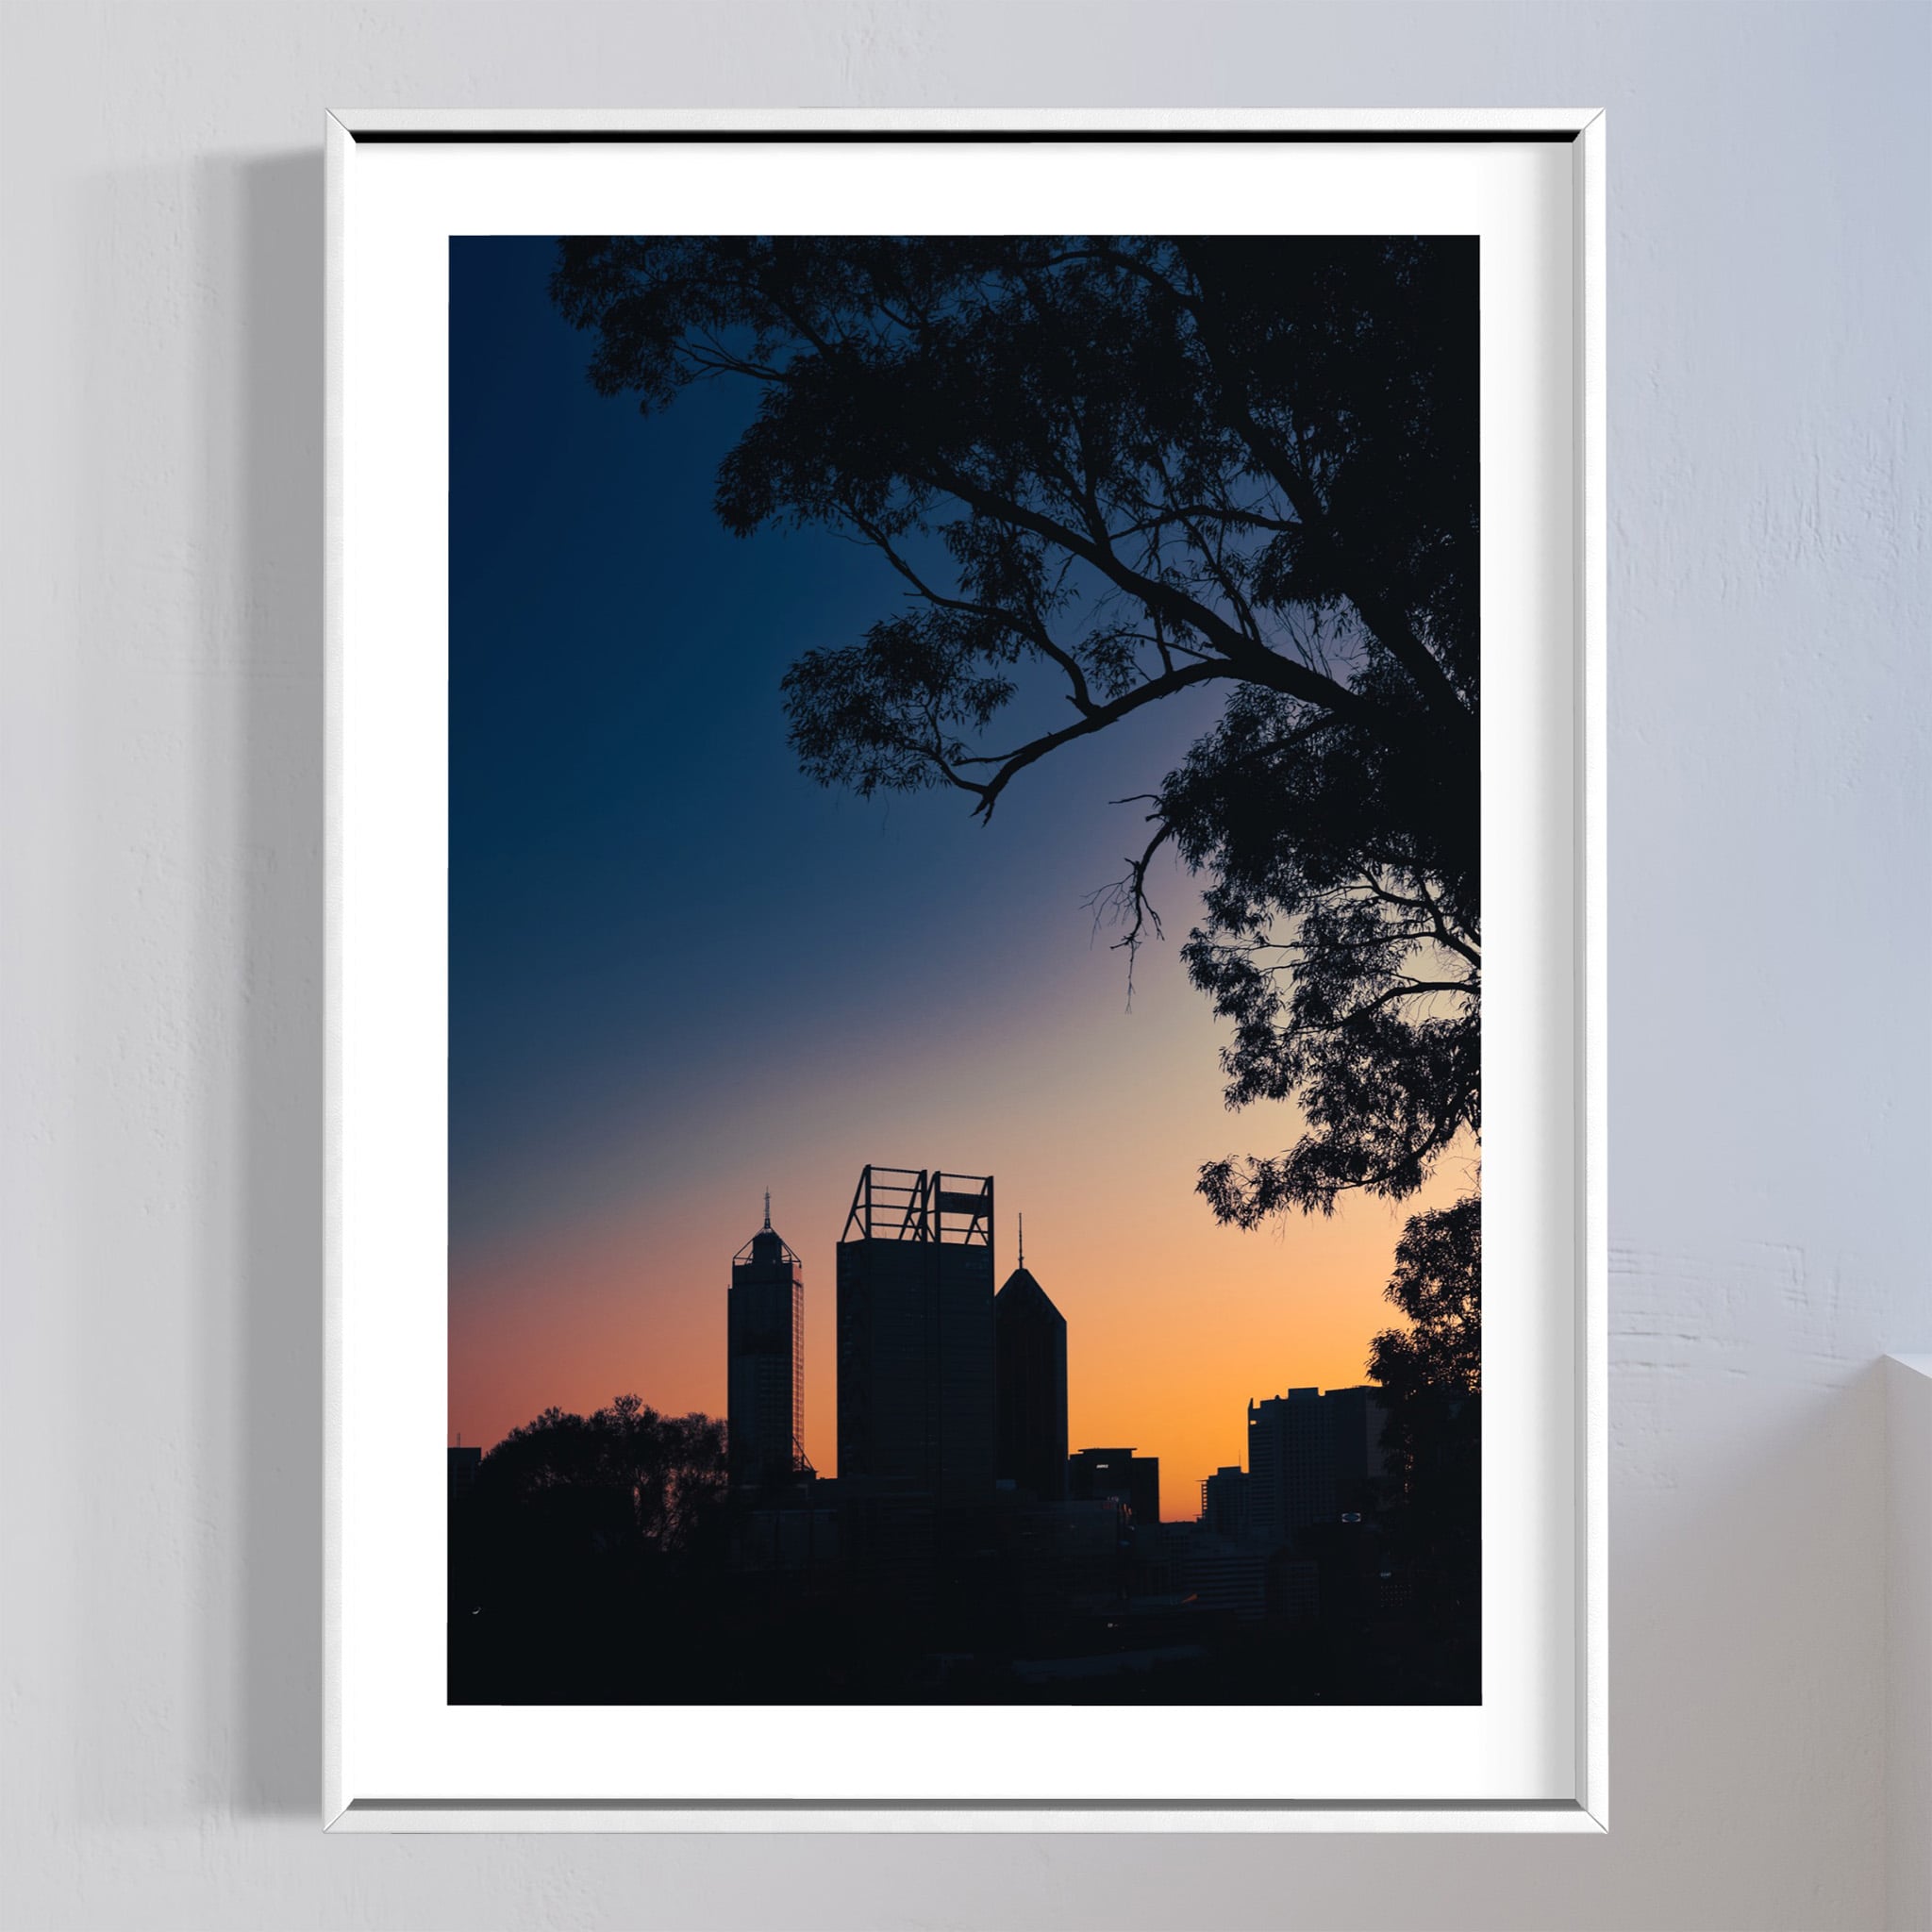 Perth-ouette Limited Edition Prints - Matt Tinney Prints